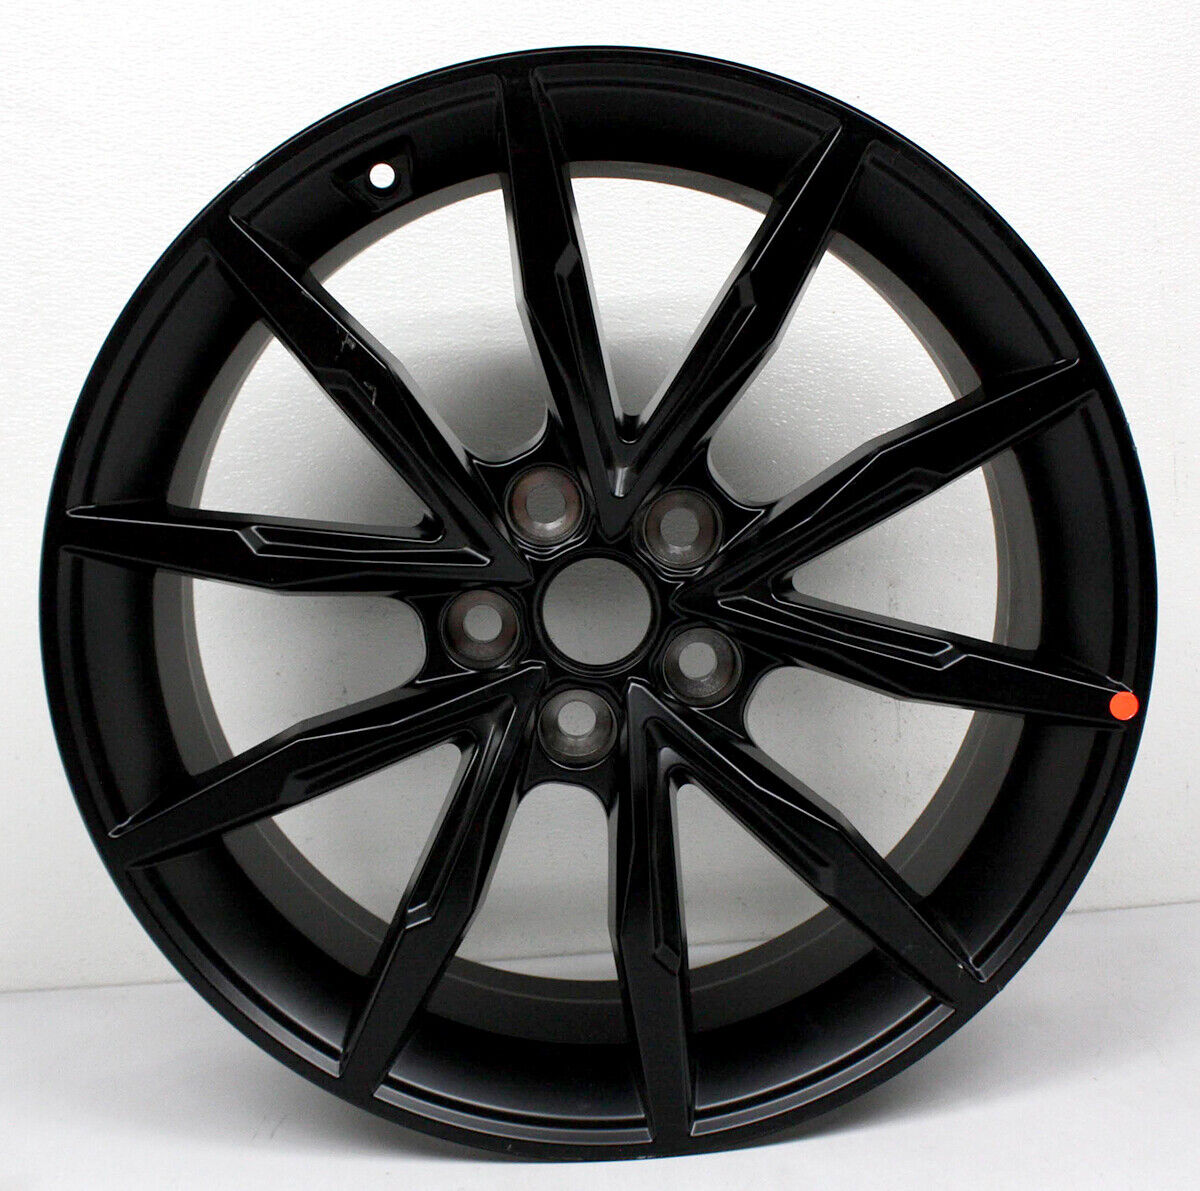 OEM 19 Inch Alloy Wheel For KIA Stinger Black J5529-AB100